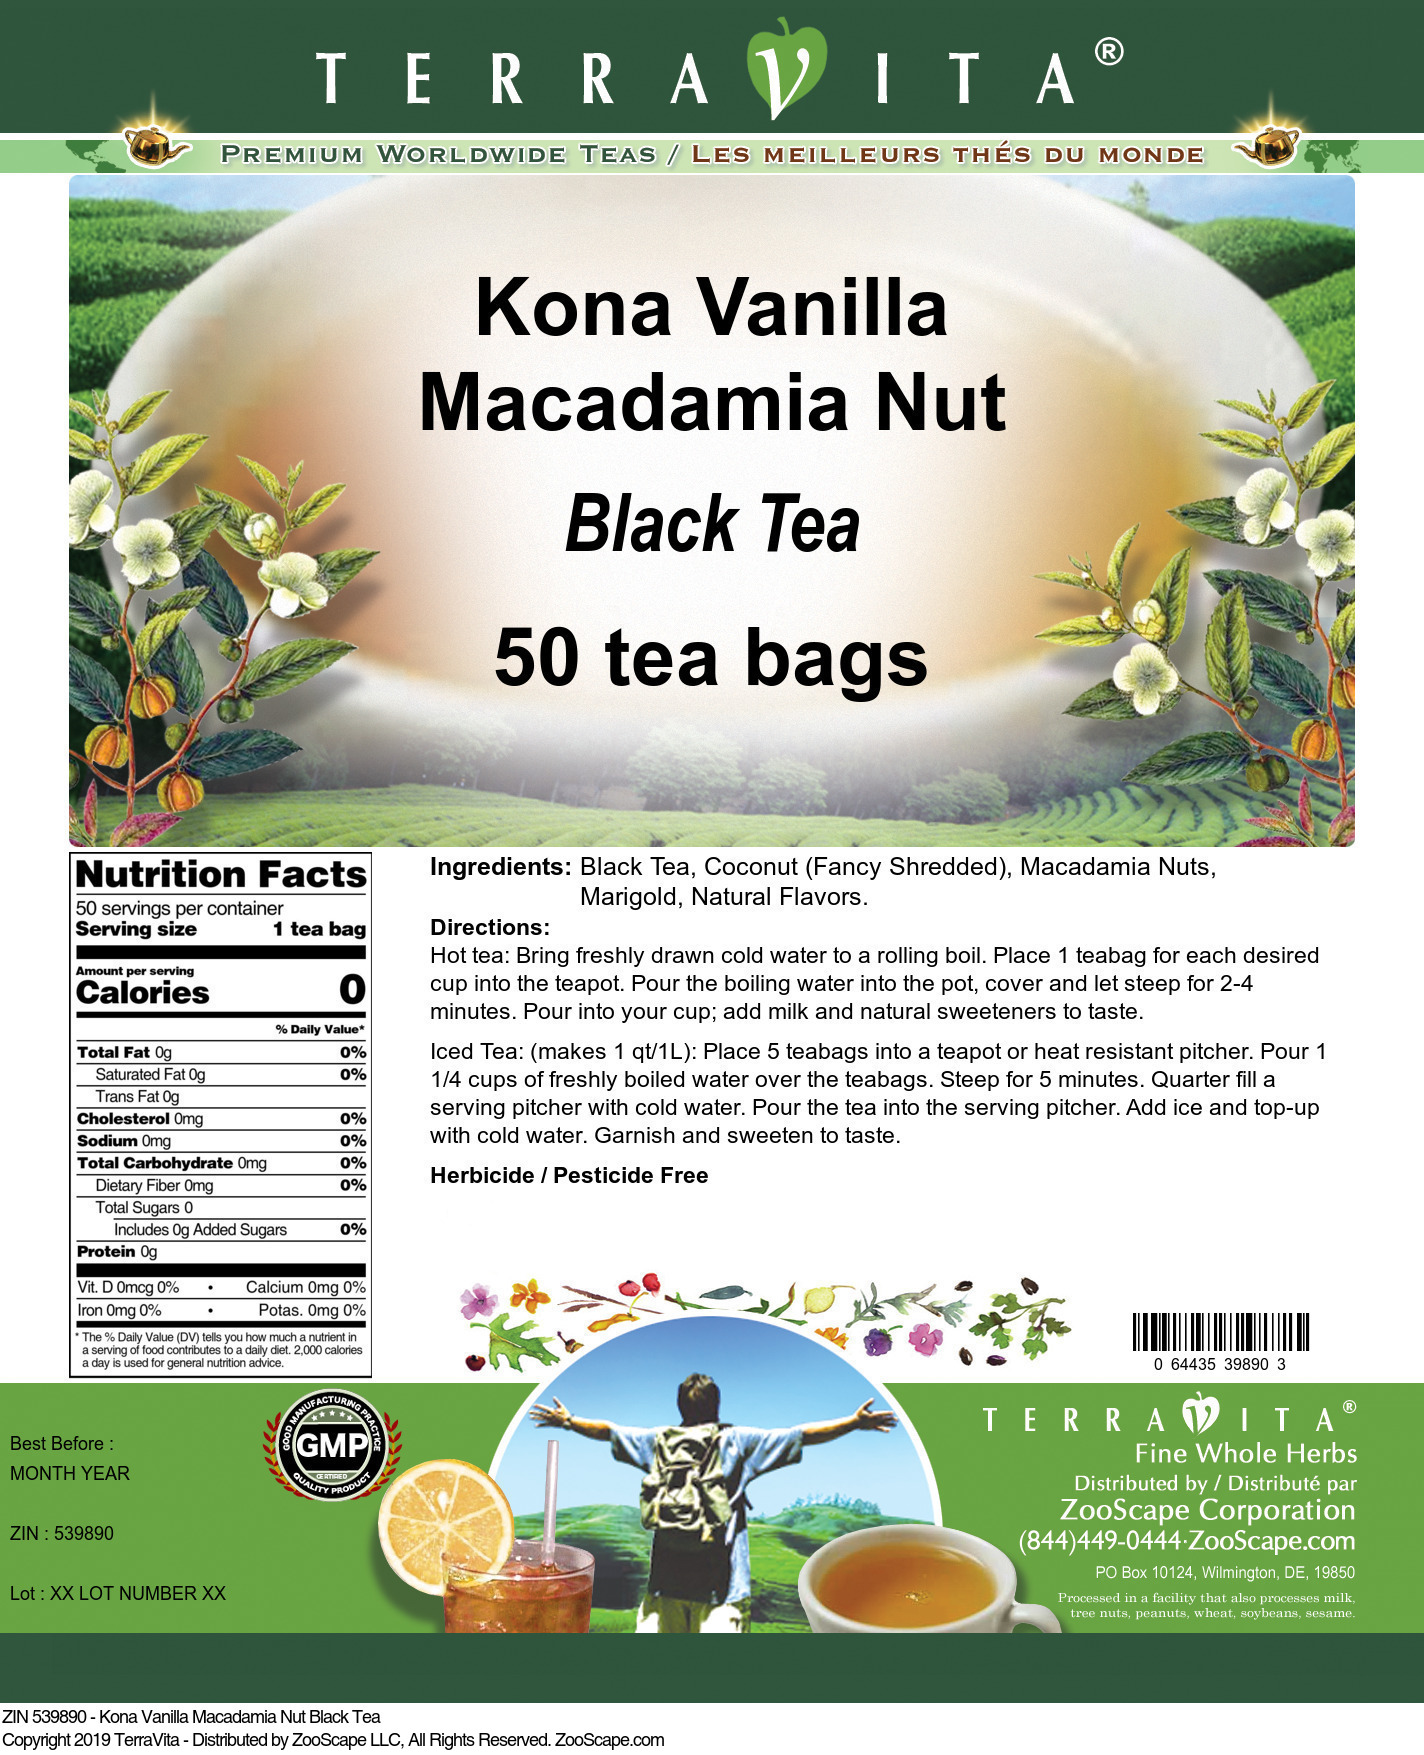 Kona Vanilla Macadamia Nut Black Tea - Label